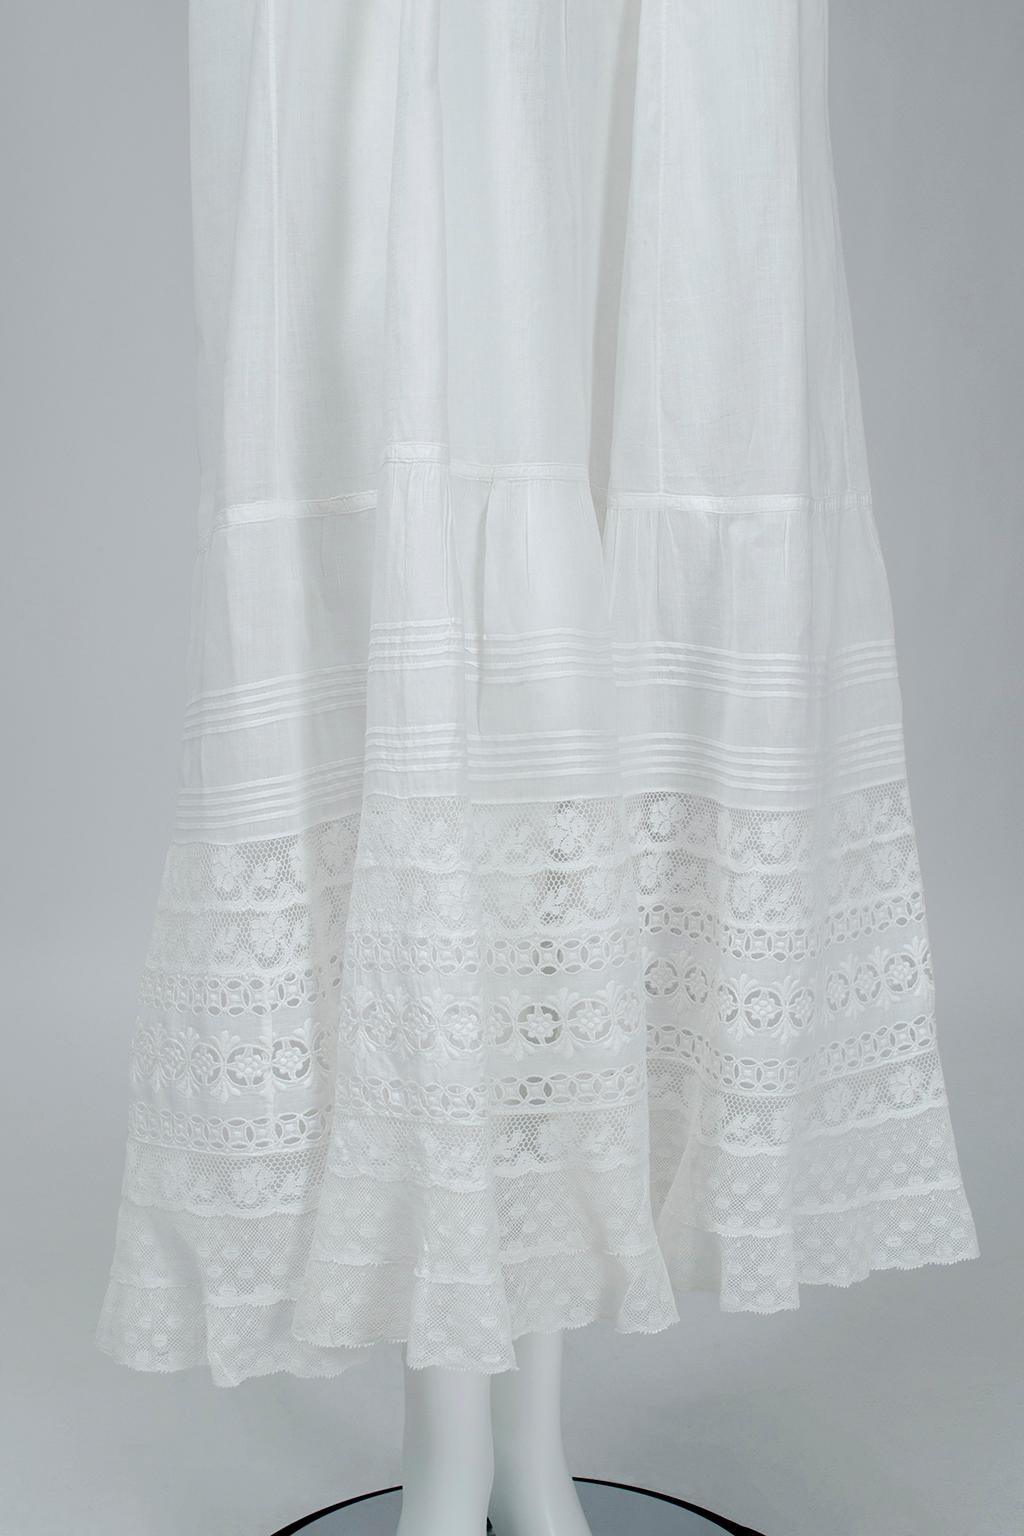 White Edwardian Eyelet and Lace Full Bridal Petticoat Nightgown - XS, 1900s 4